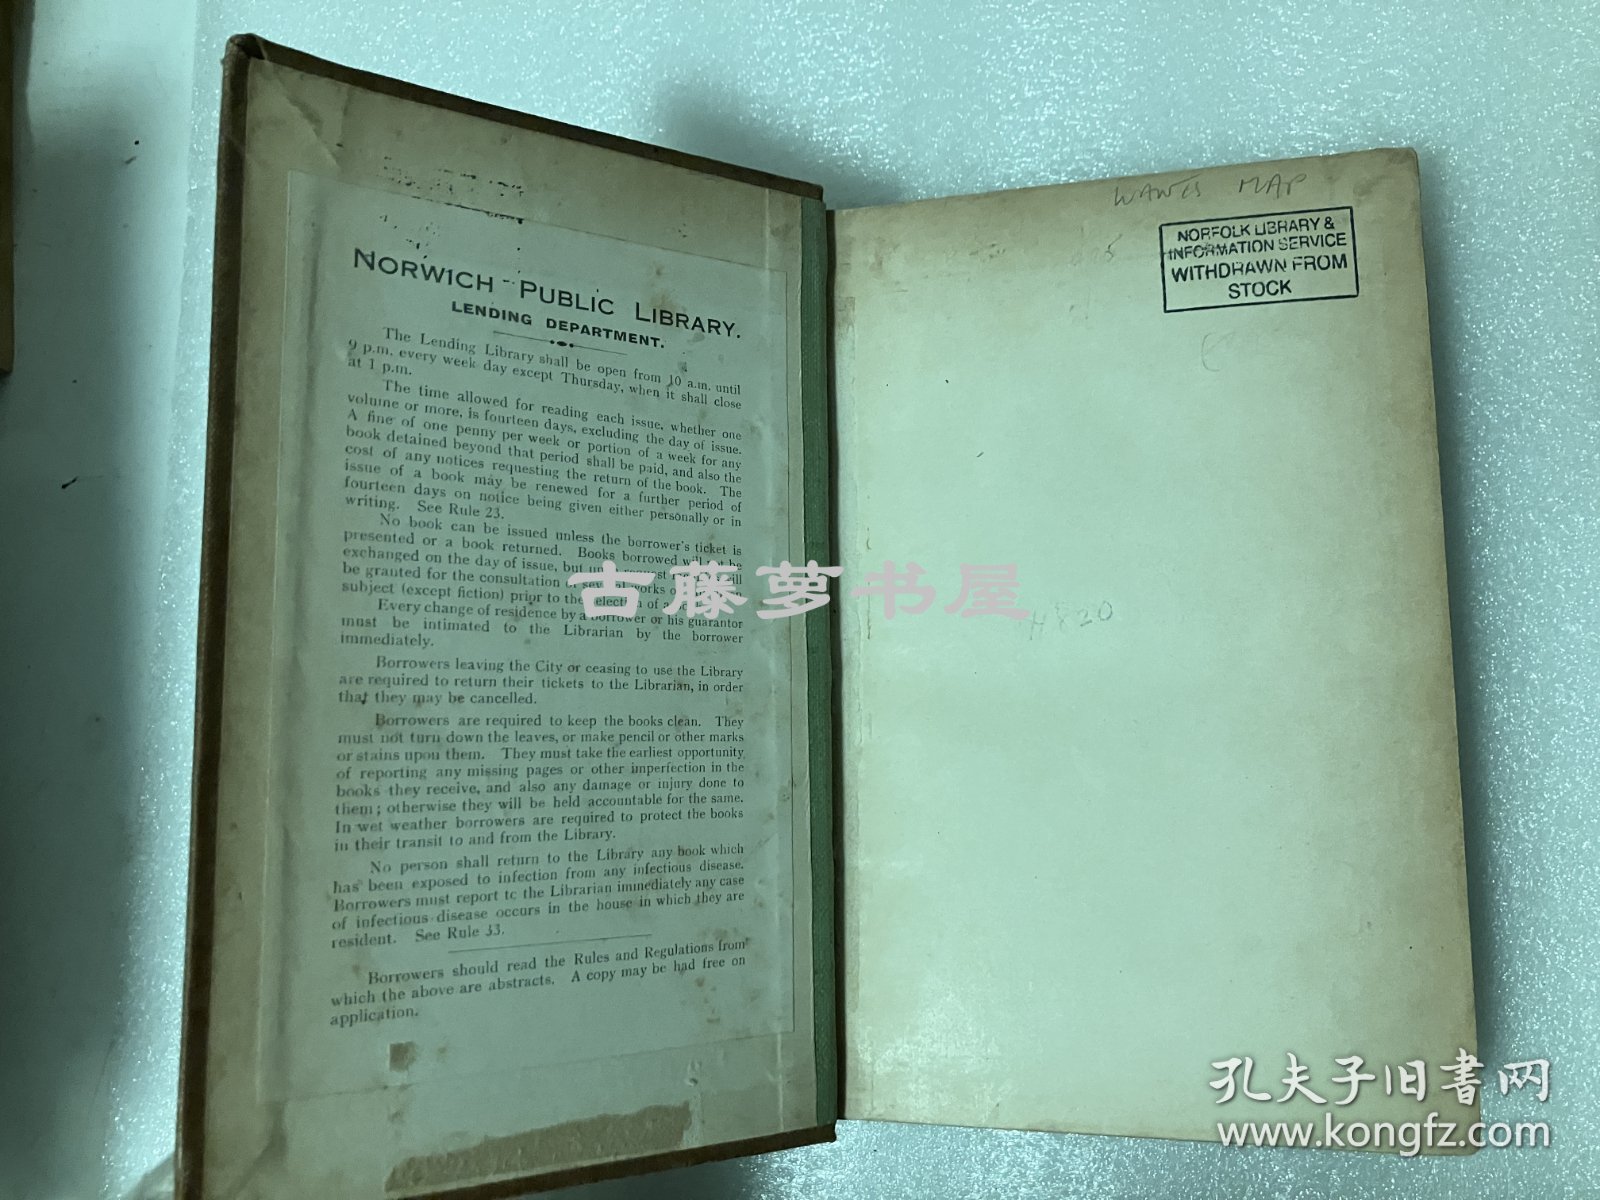 1875年英文原版， 《雪的起源——从中国西藏到印度的旅程》THE ABODE OF SNOW，Observations on a Journey from Chinese Tibet to the Indian